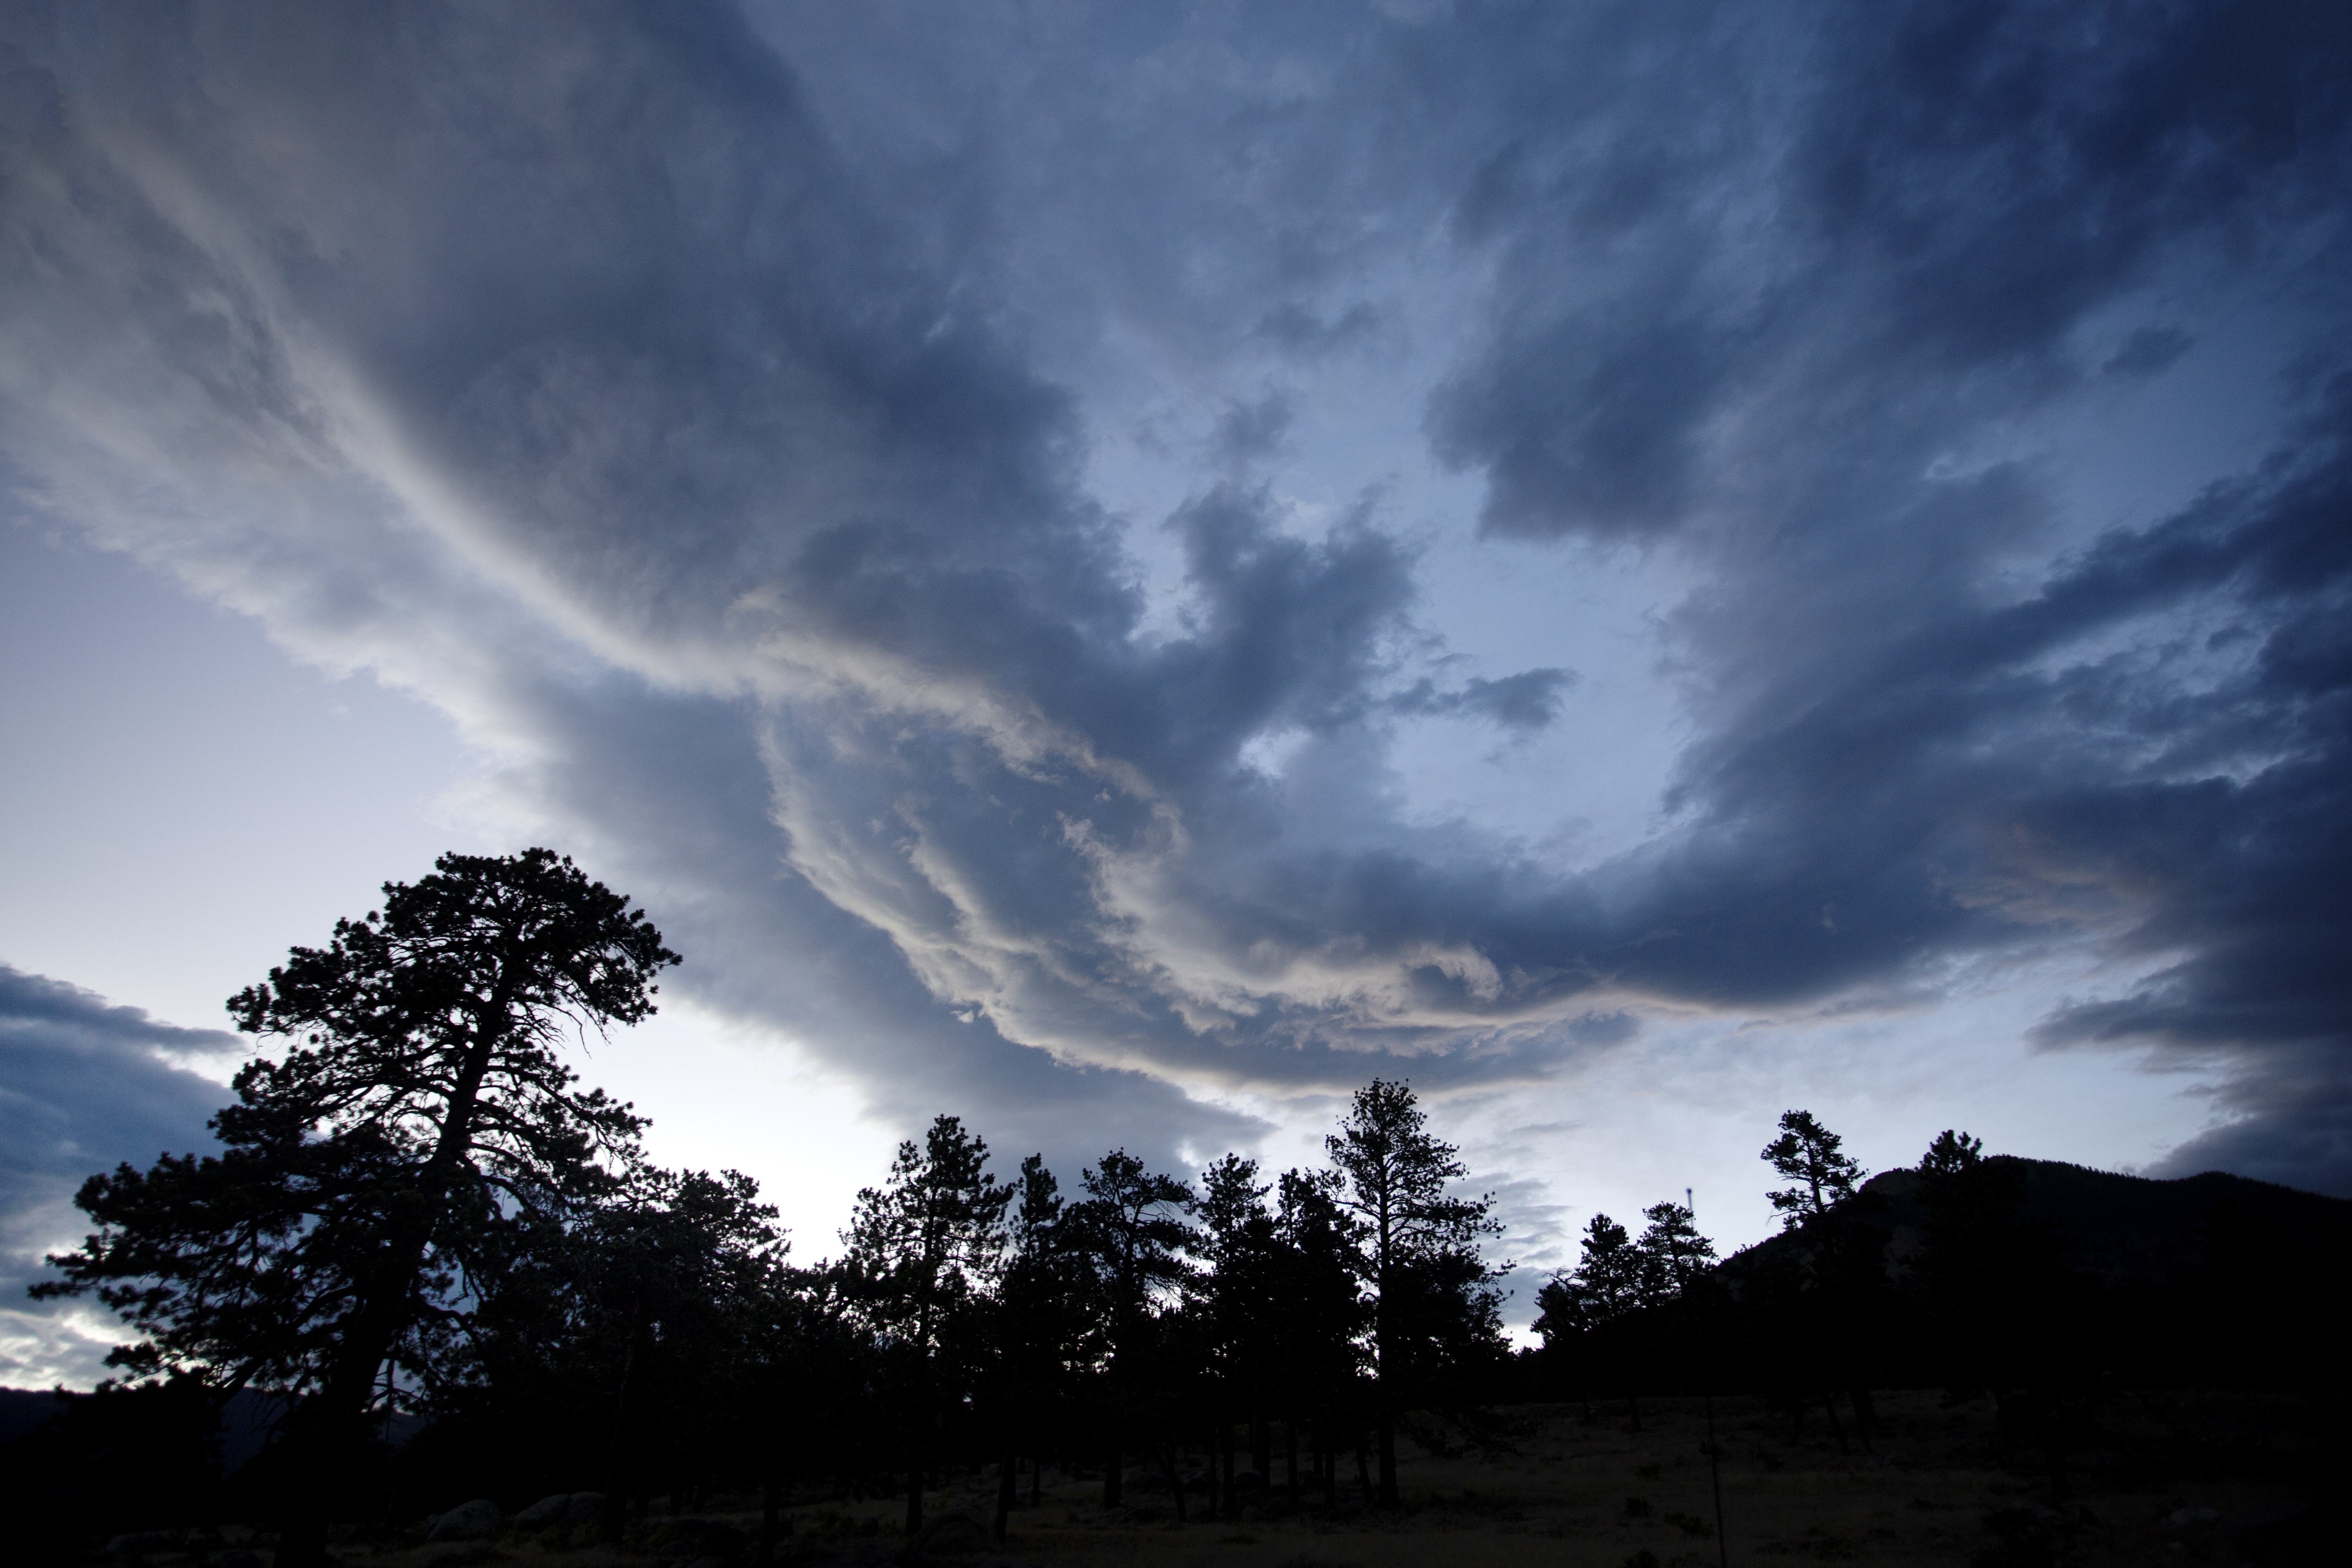 https://www.nps.gov/romo/planyourvisit/images/stormy-skies_Grossman.jpg